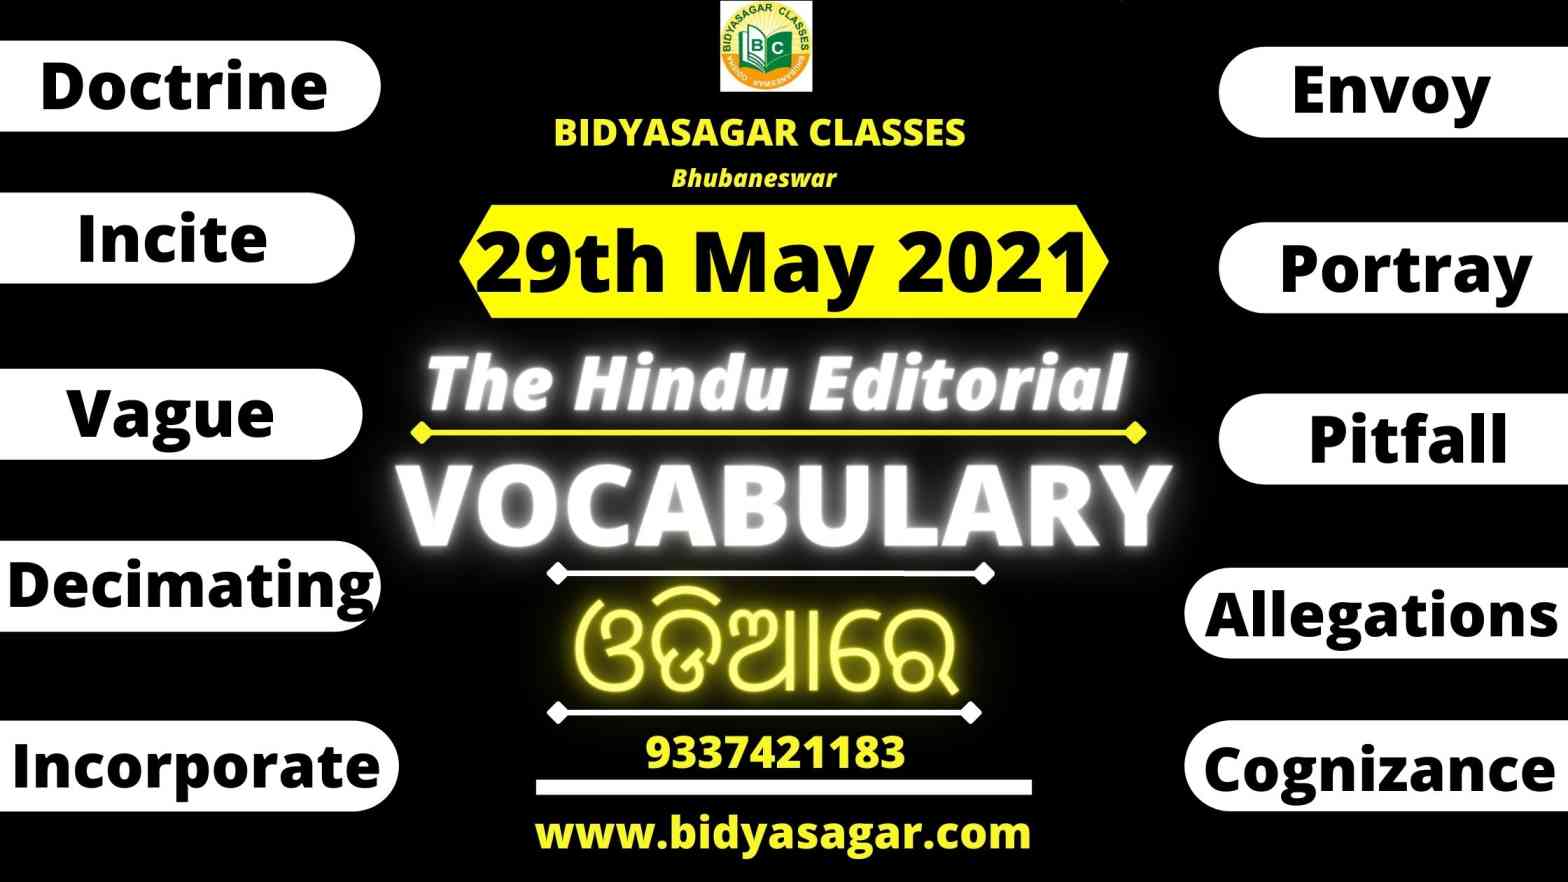 The Hindu Editorial Vocabulary of 29th May 2021